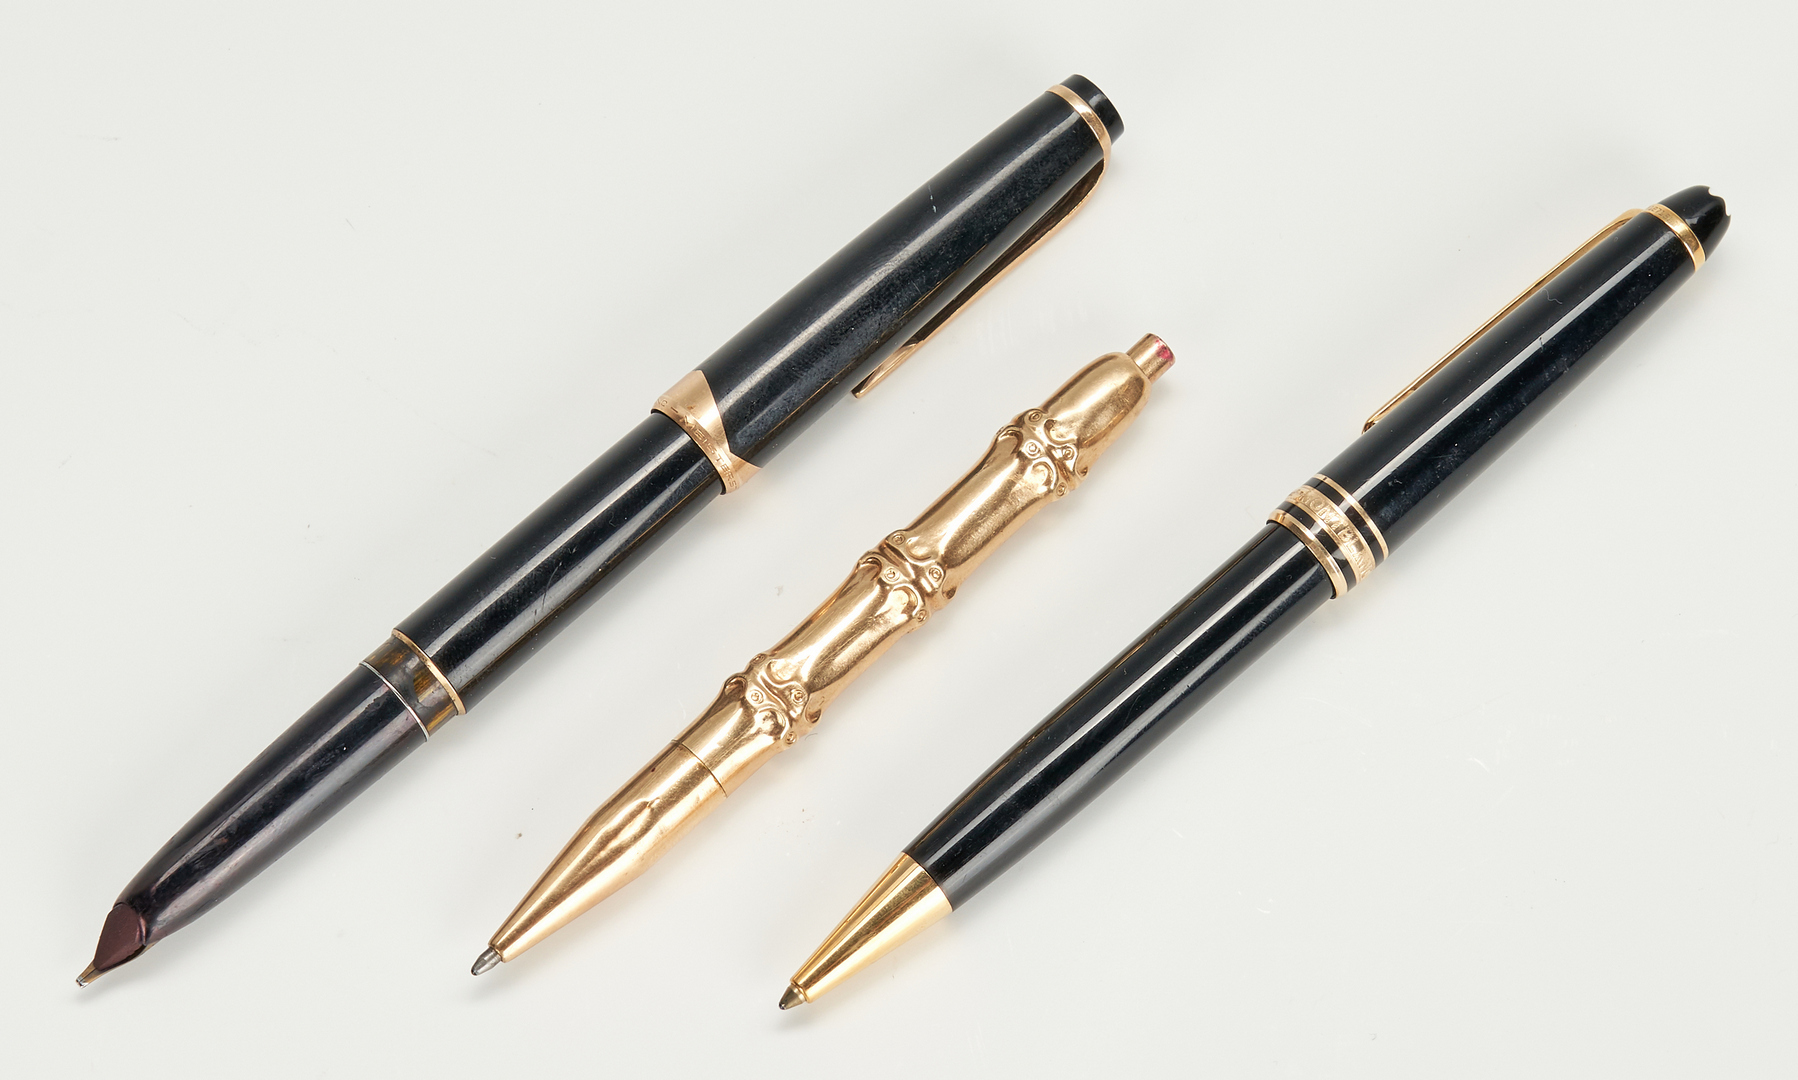 Lot 786: 5 Pens – 2 Montblanc, 2 gold color, 1 Marked 14k